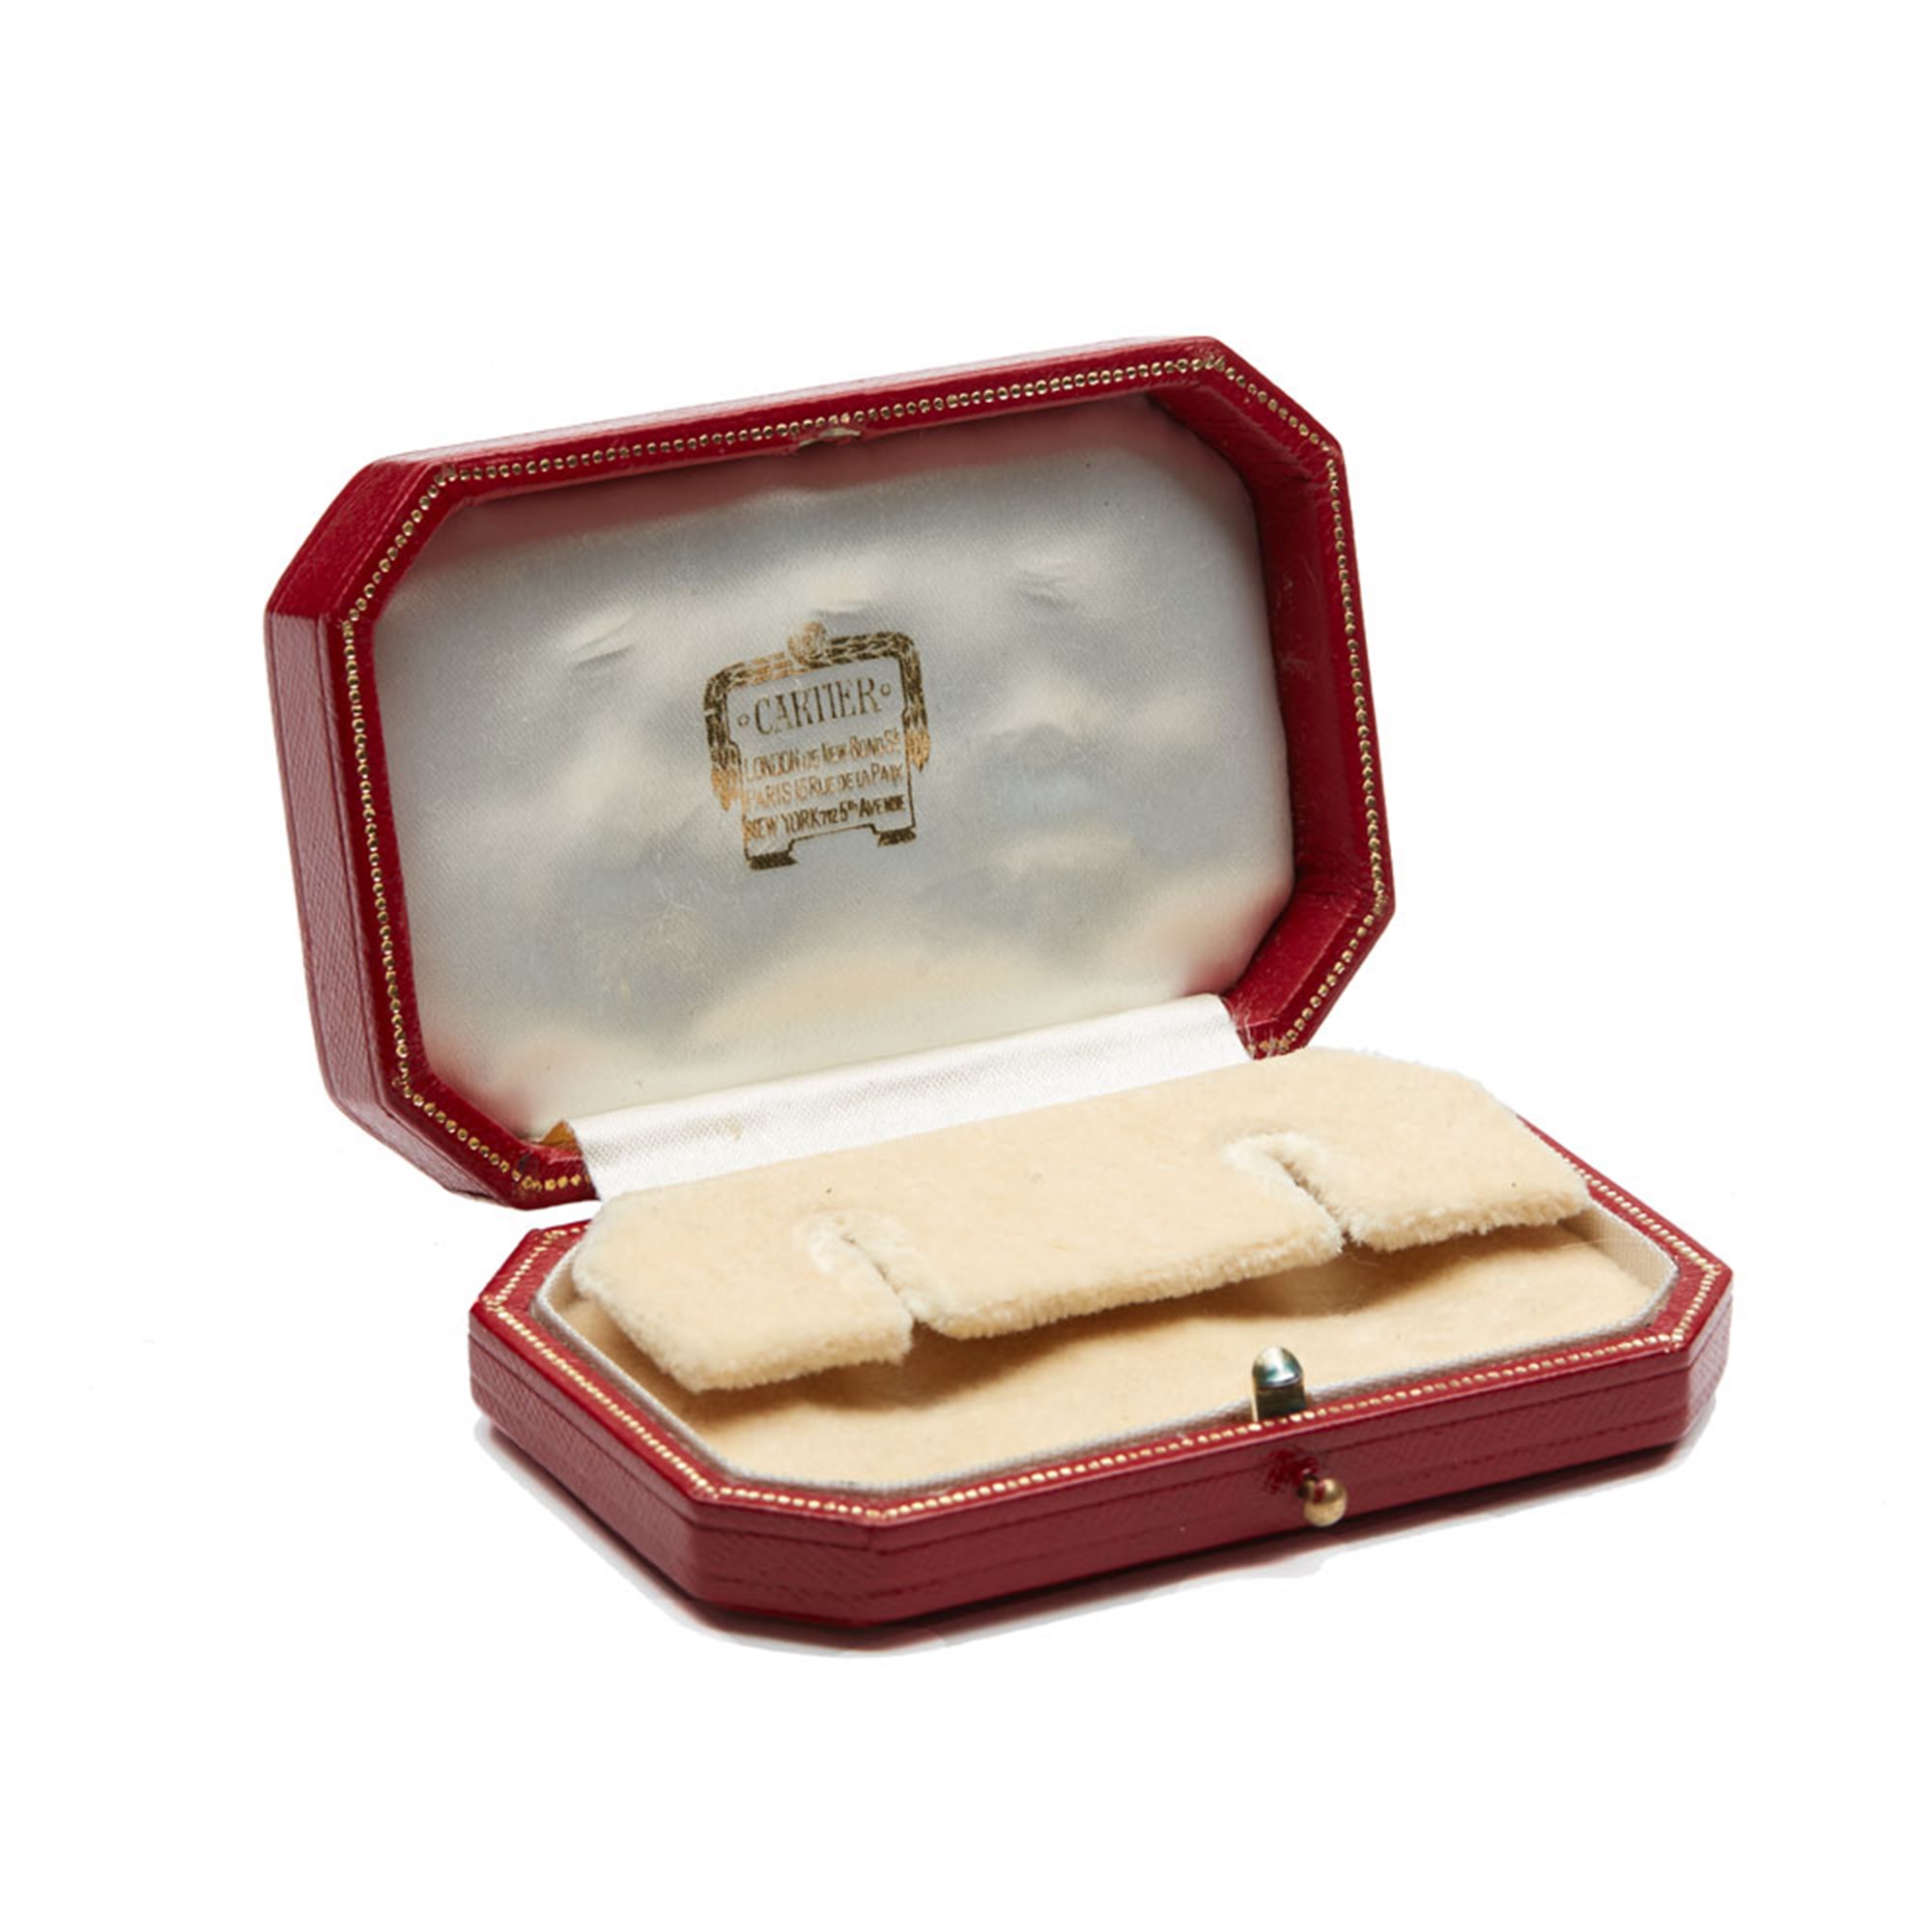 Cartier 18k White Gold Pink Tourmaline & Diamond Vintage Statement Earrings